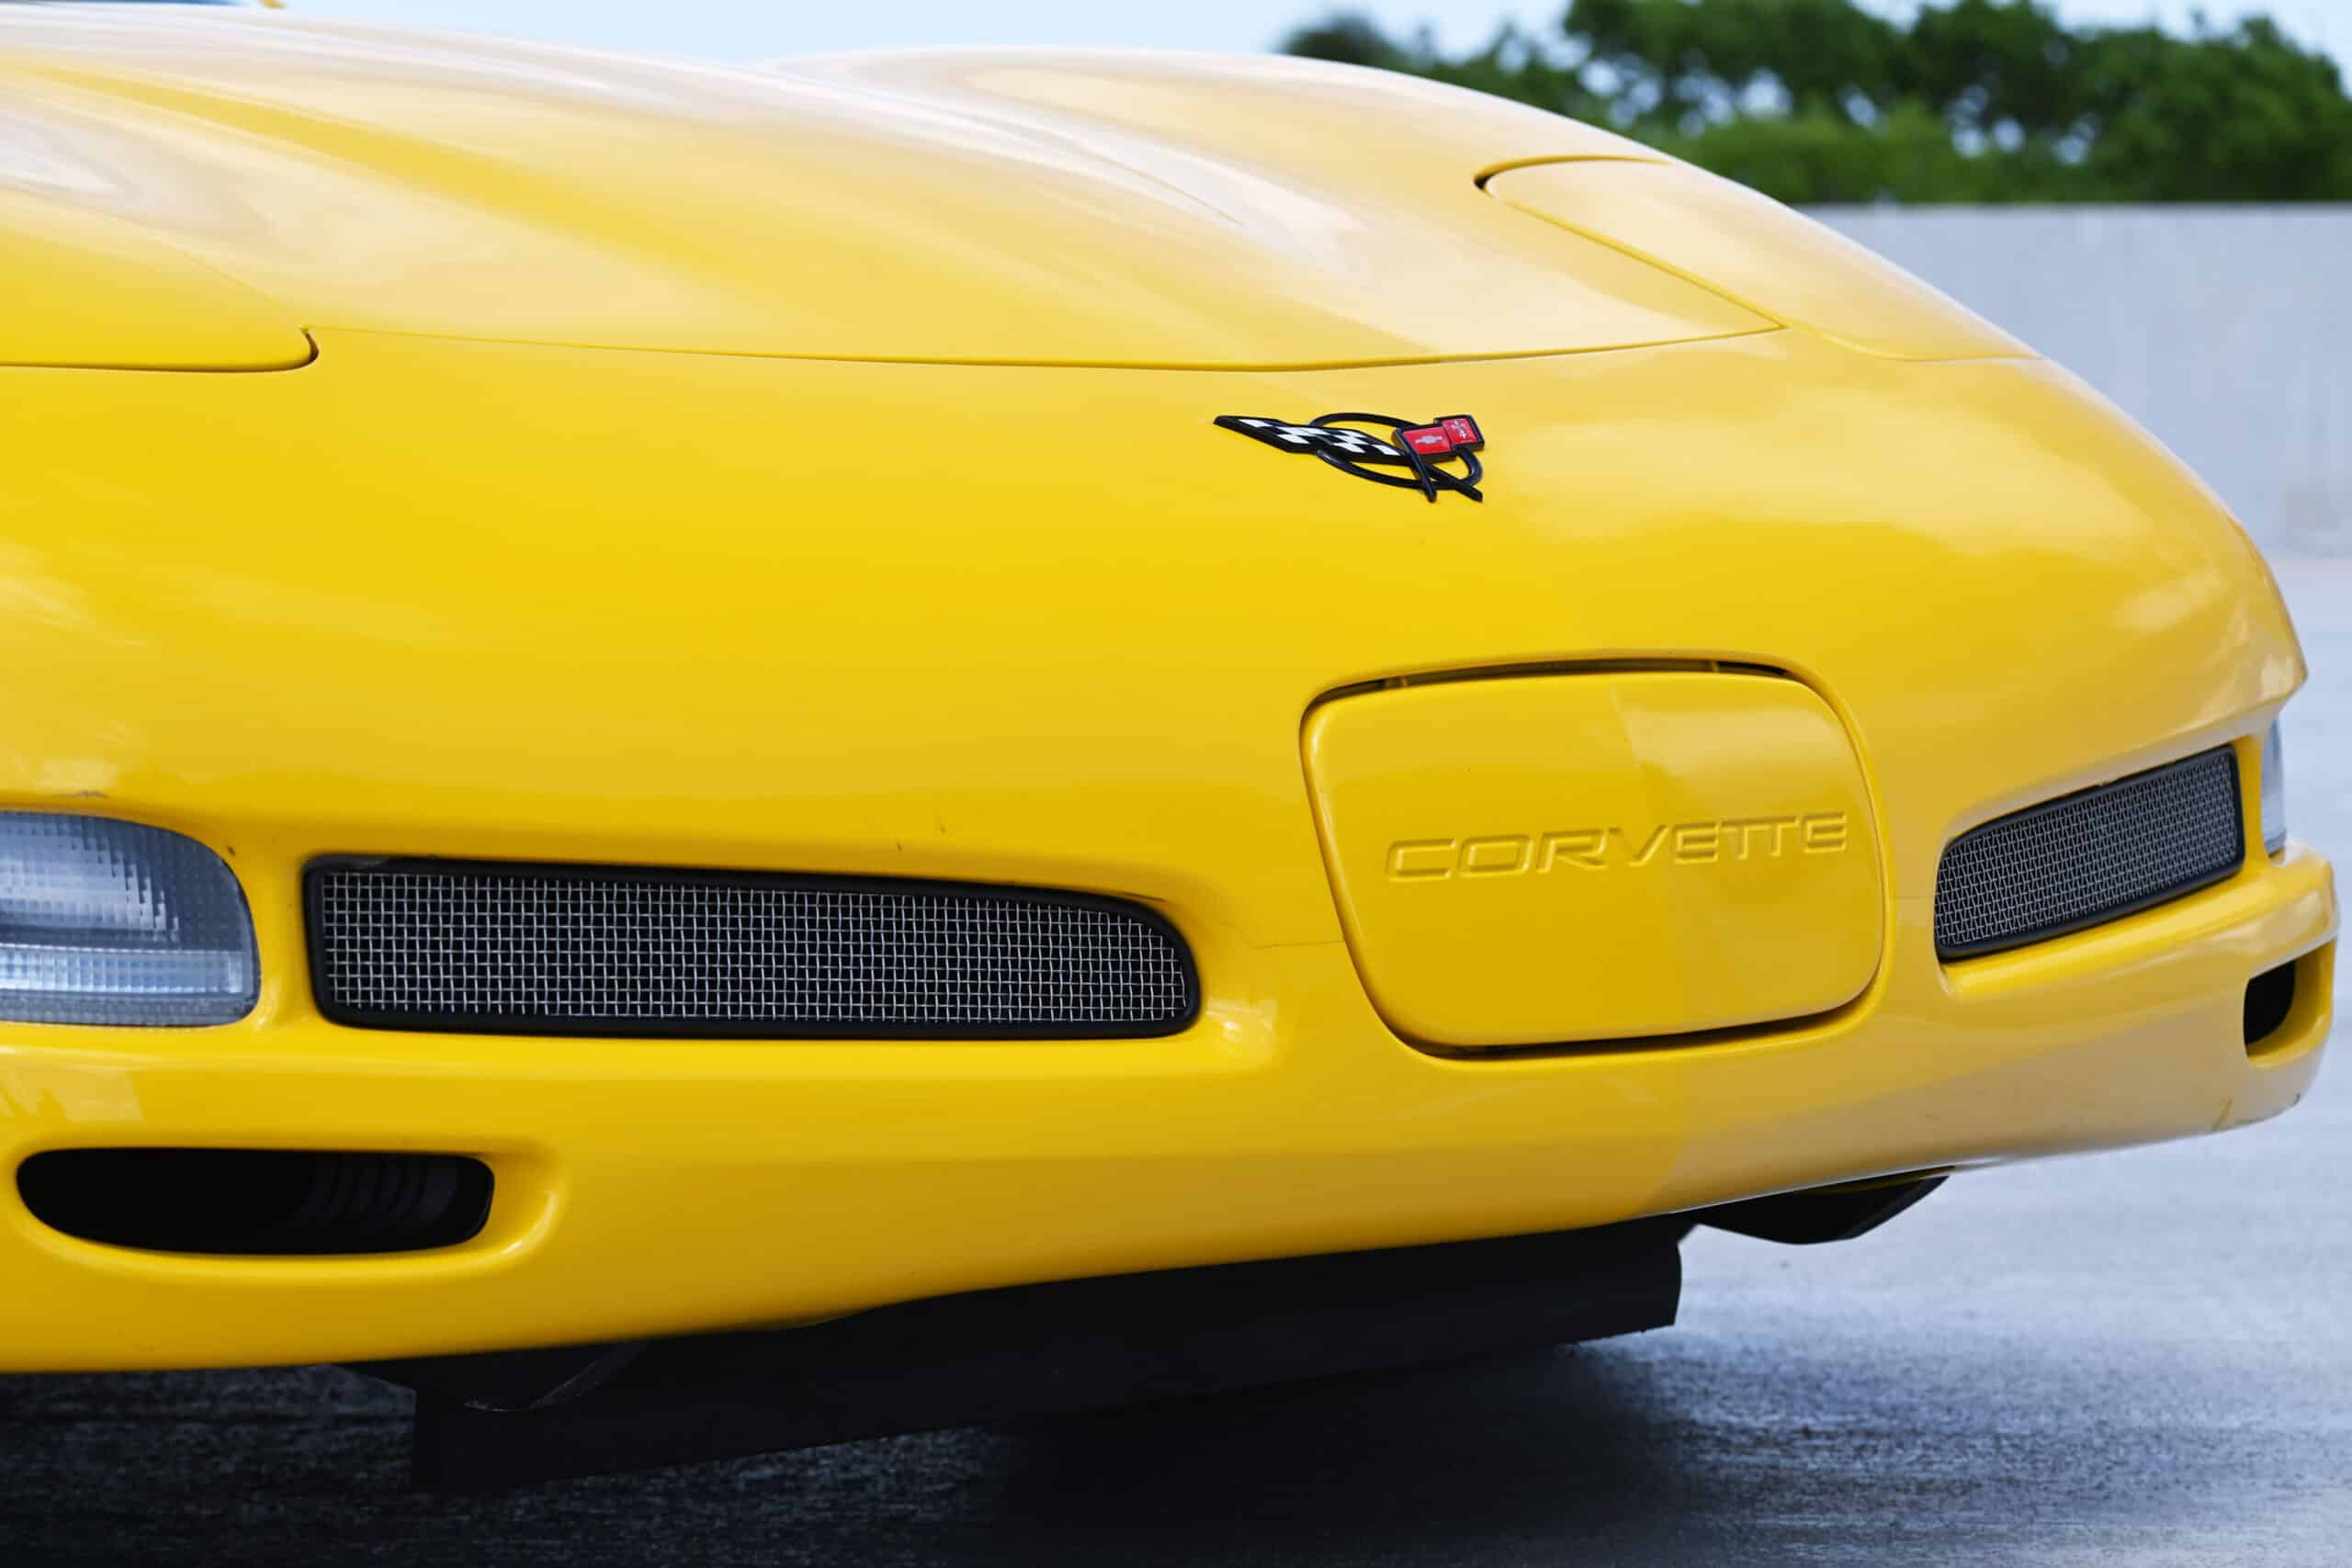 2002 Corvette Z06 / 22 Actual Miles / 1 of 1065 in Millennium Yellow / All original unmodified / Showroom Condition